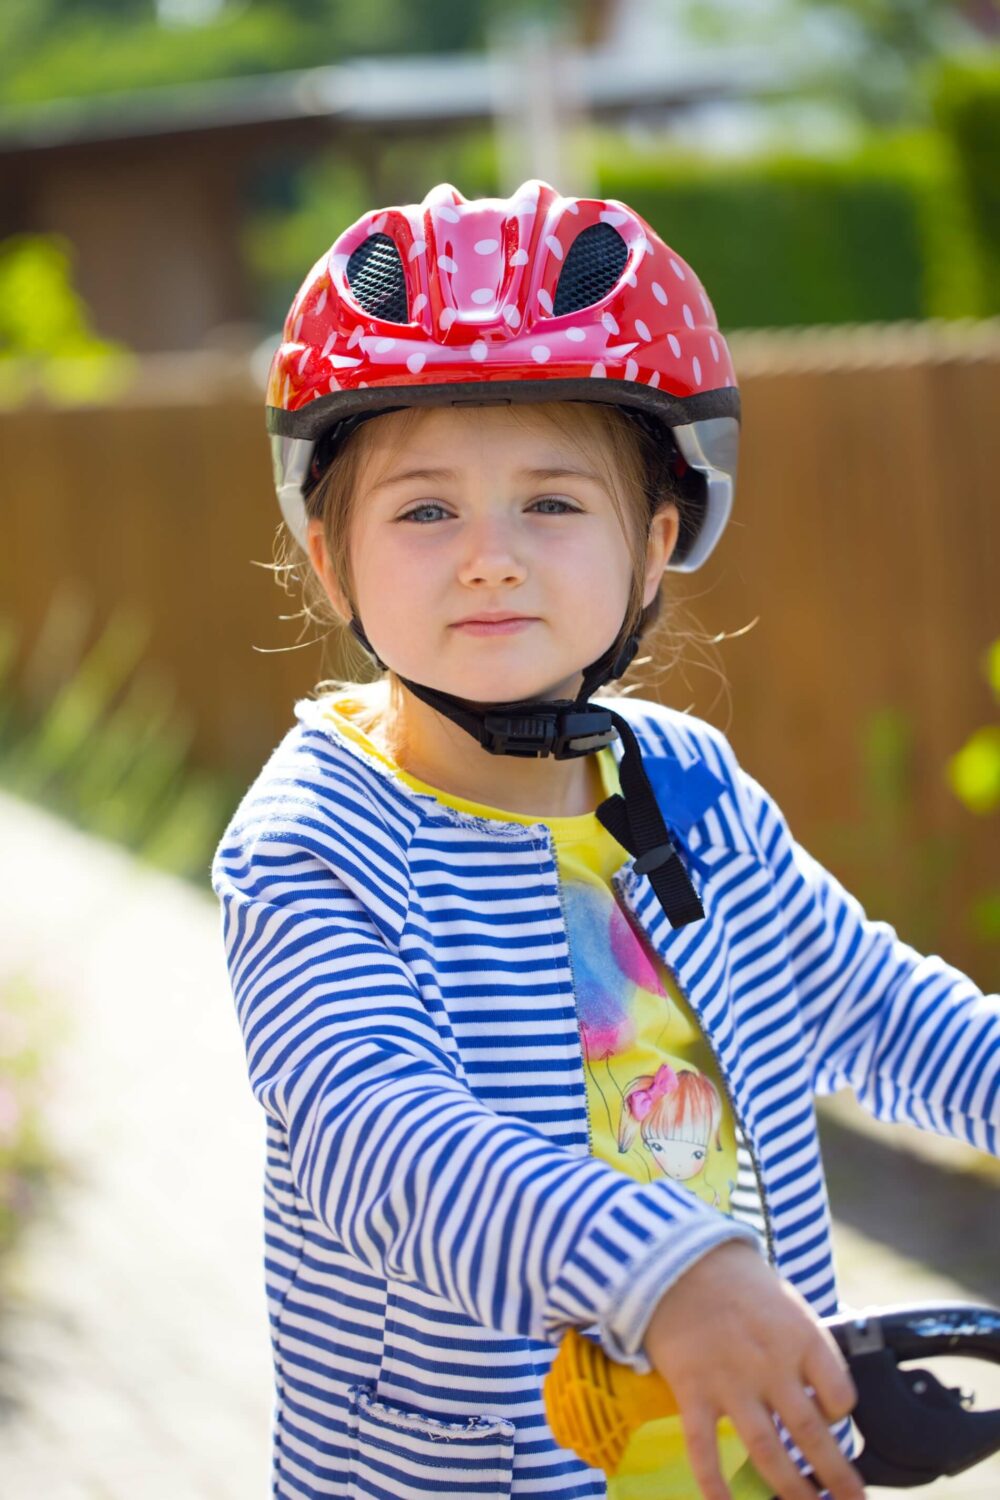 Correctly tightened kids bike helmet